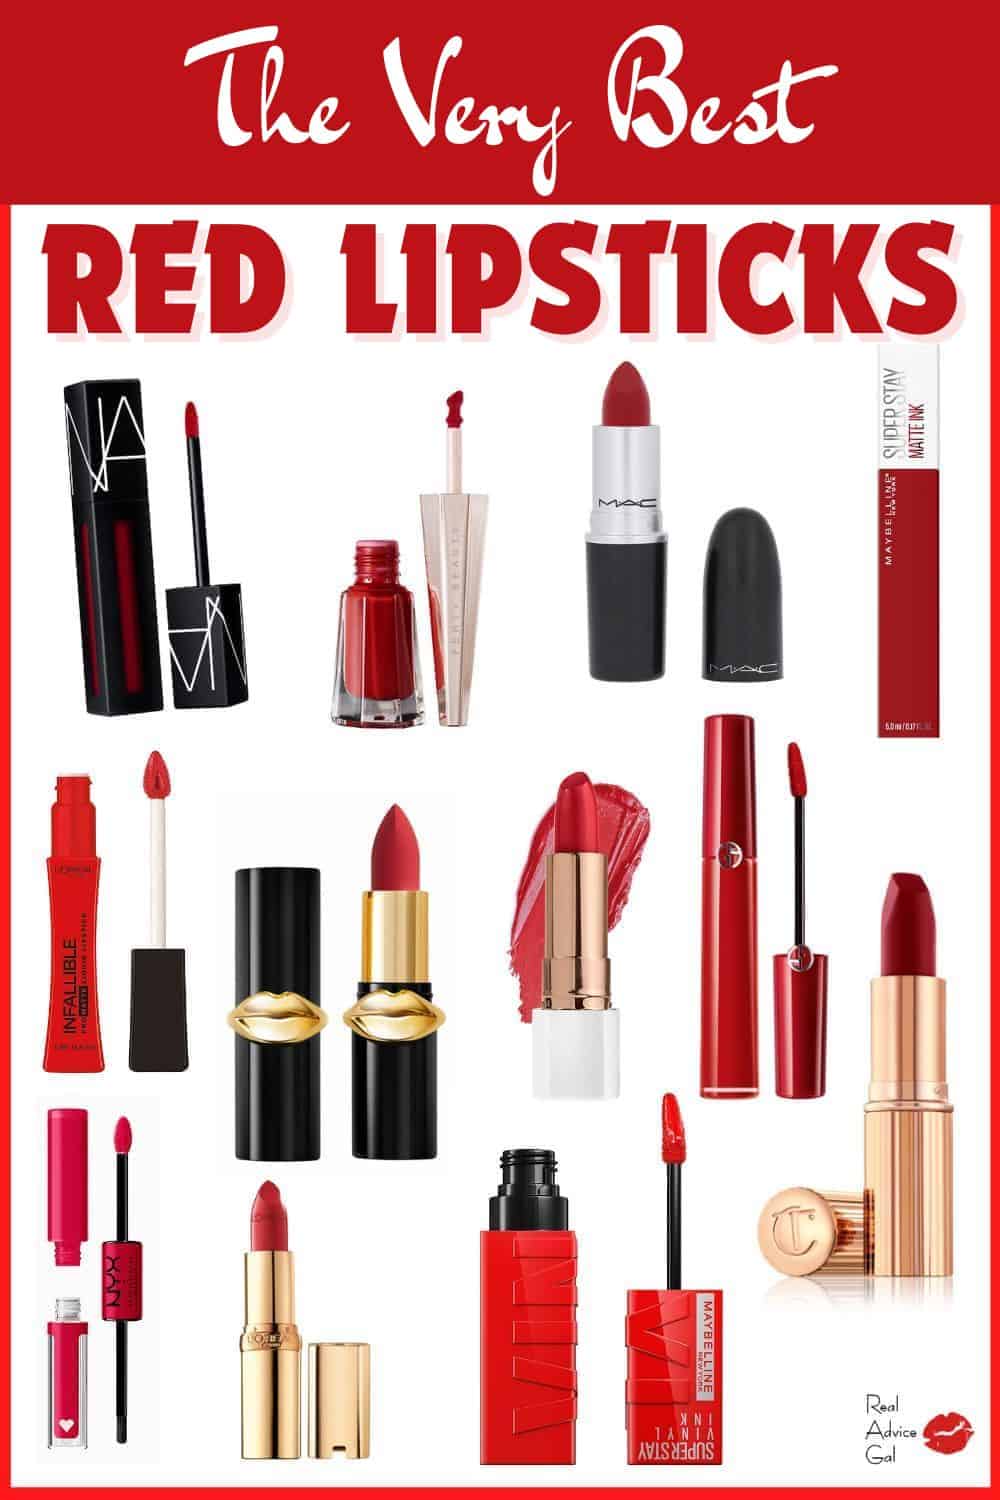 The best red lipsticks!